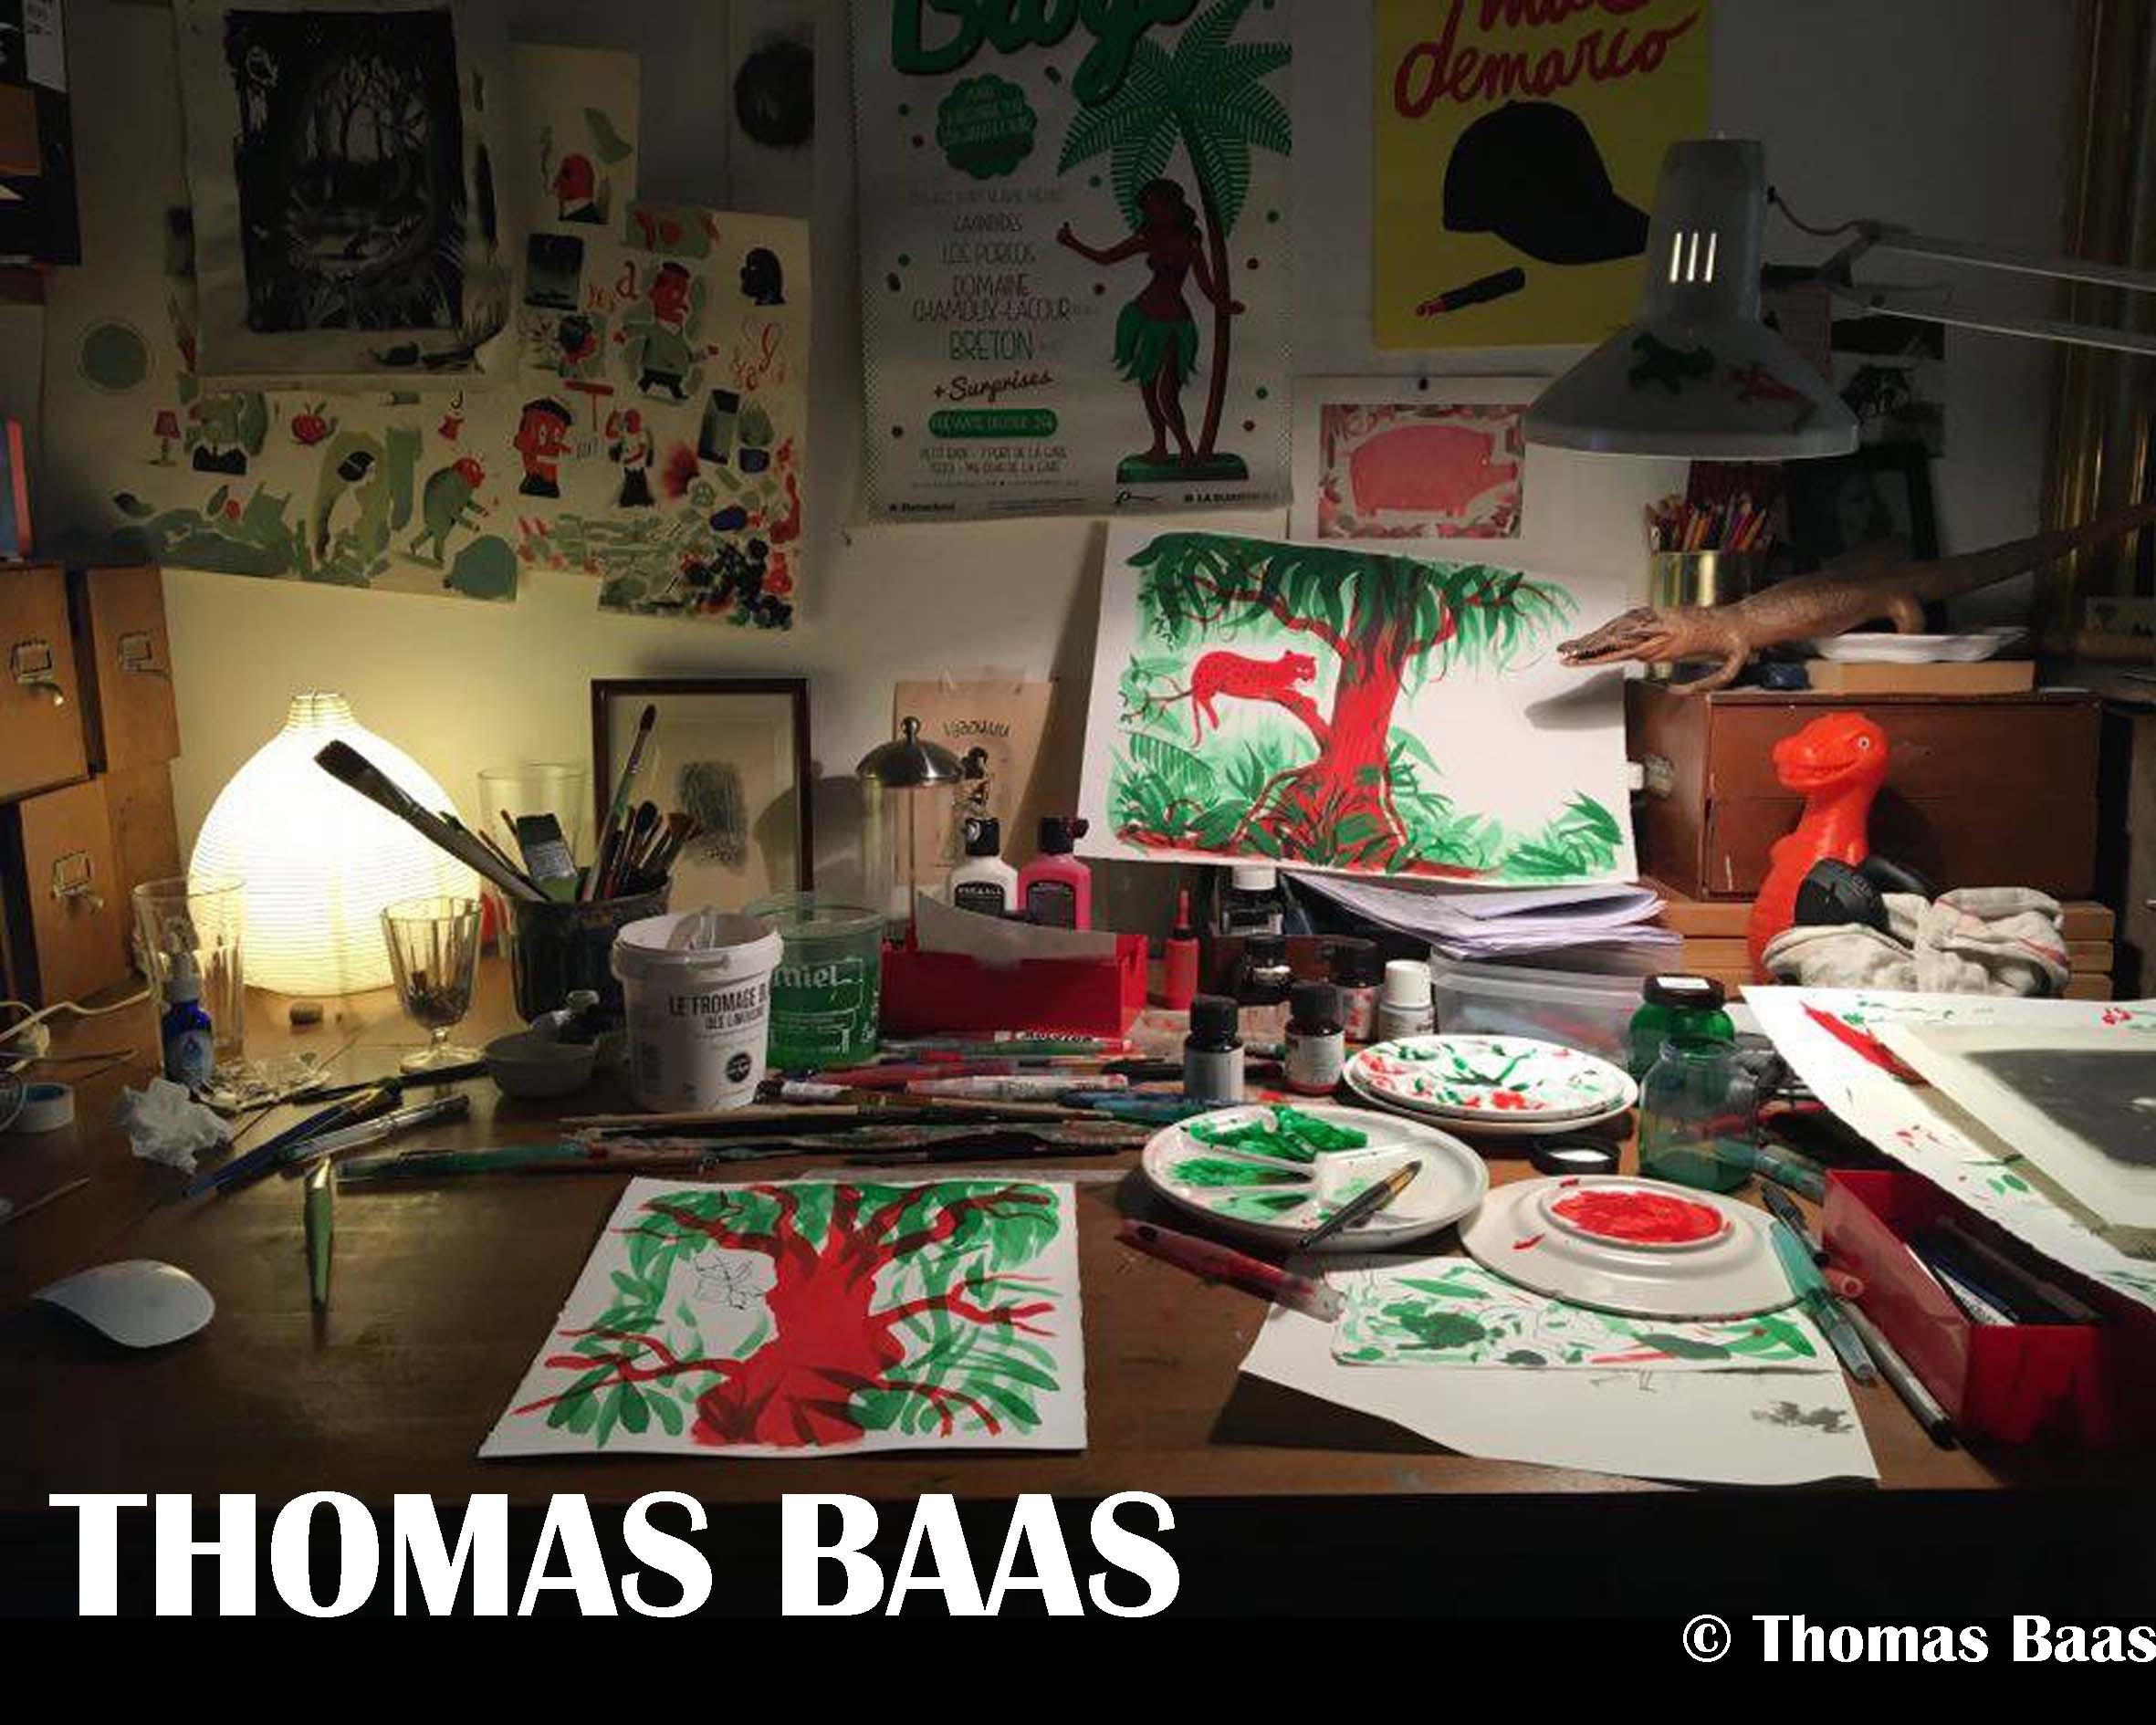 Thomas Baas